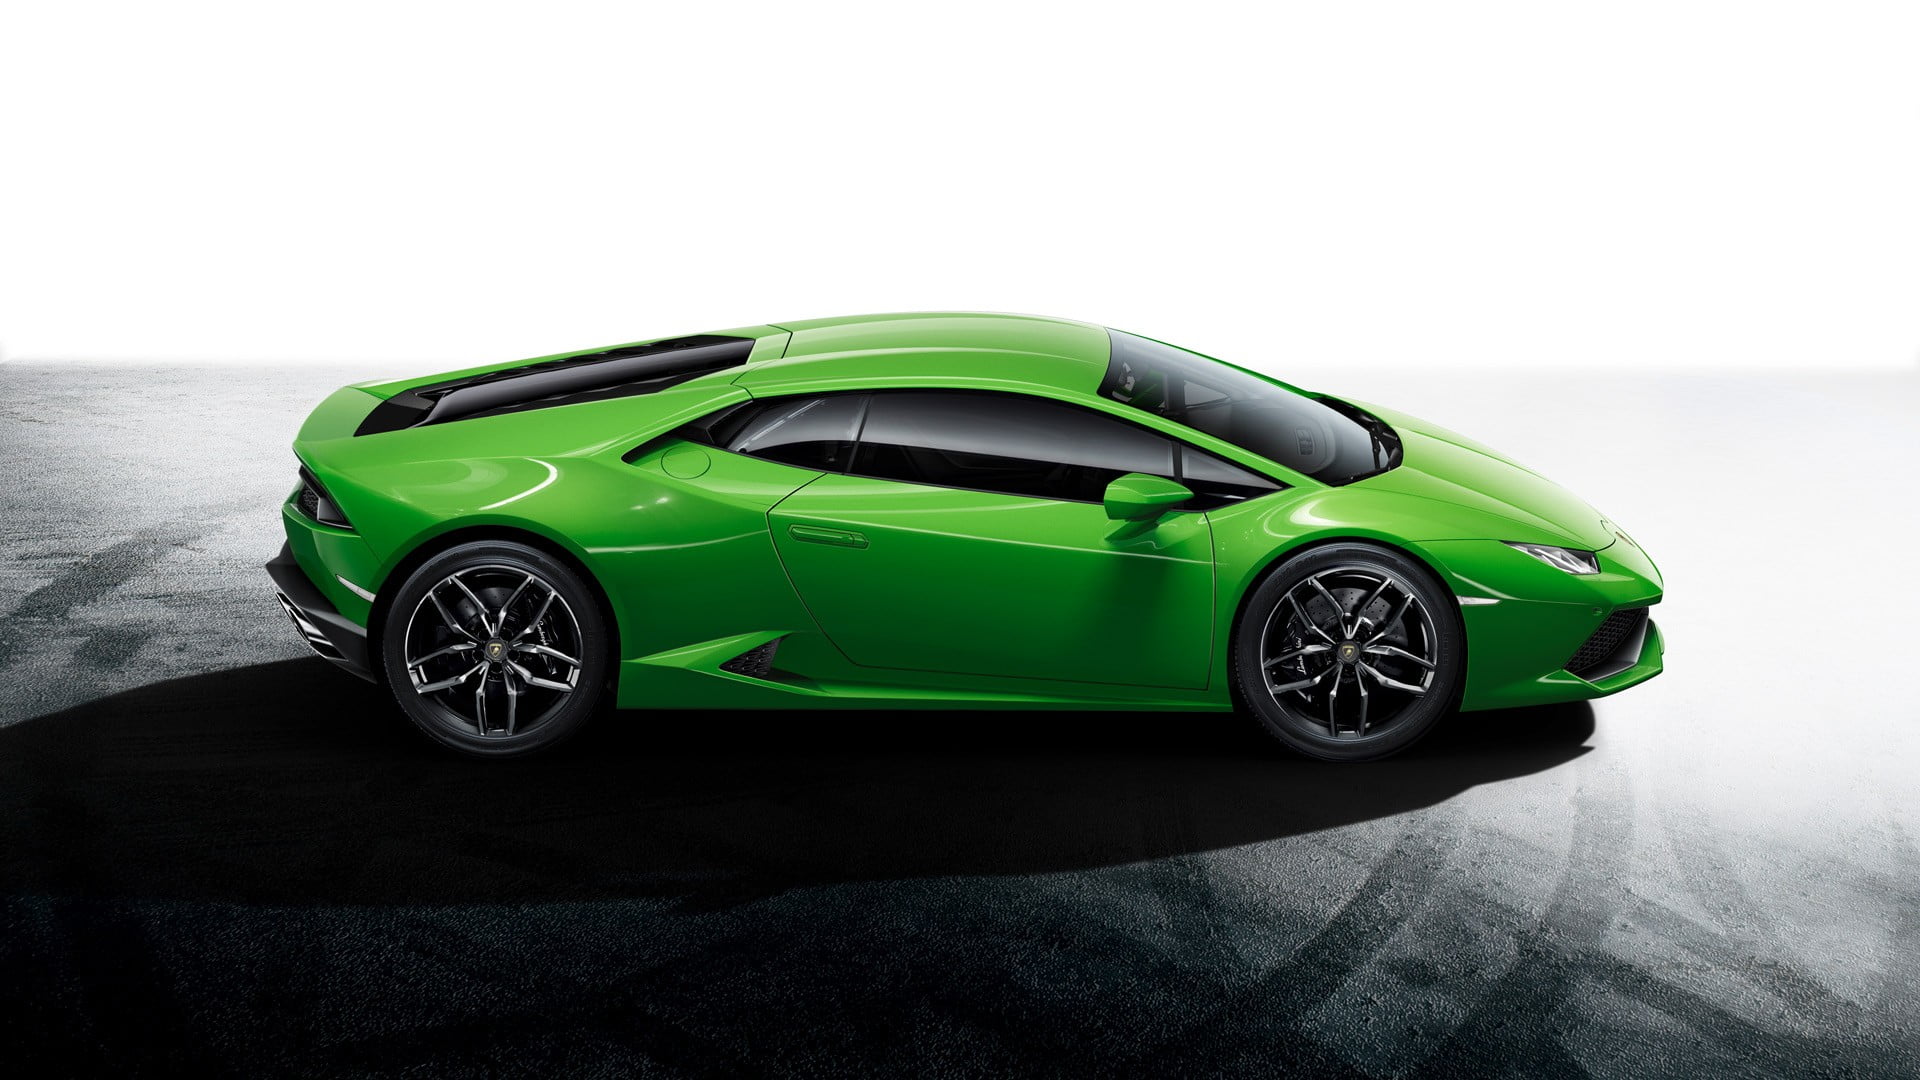 green sports car illustration, Lamborghini Huracan LP 610-4 , Lamborghini, green cars